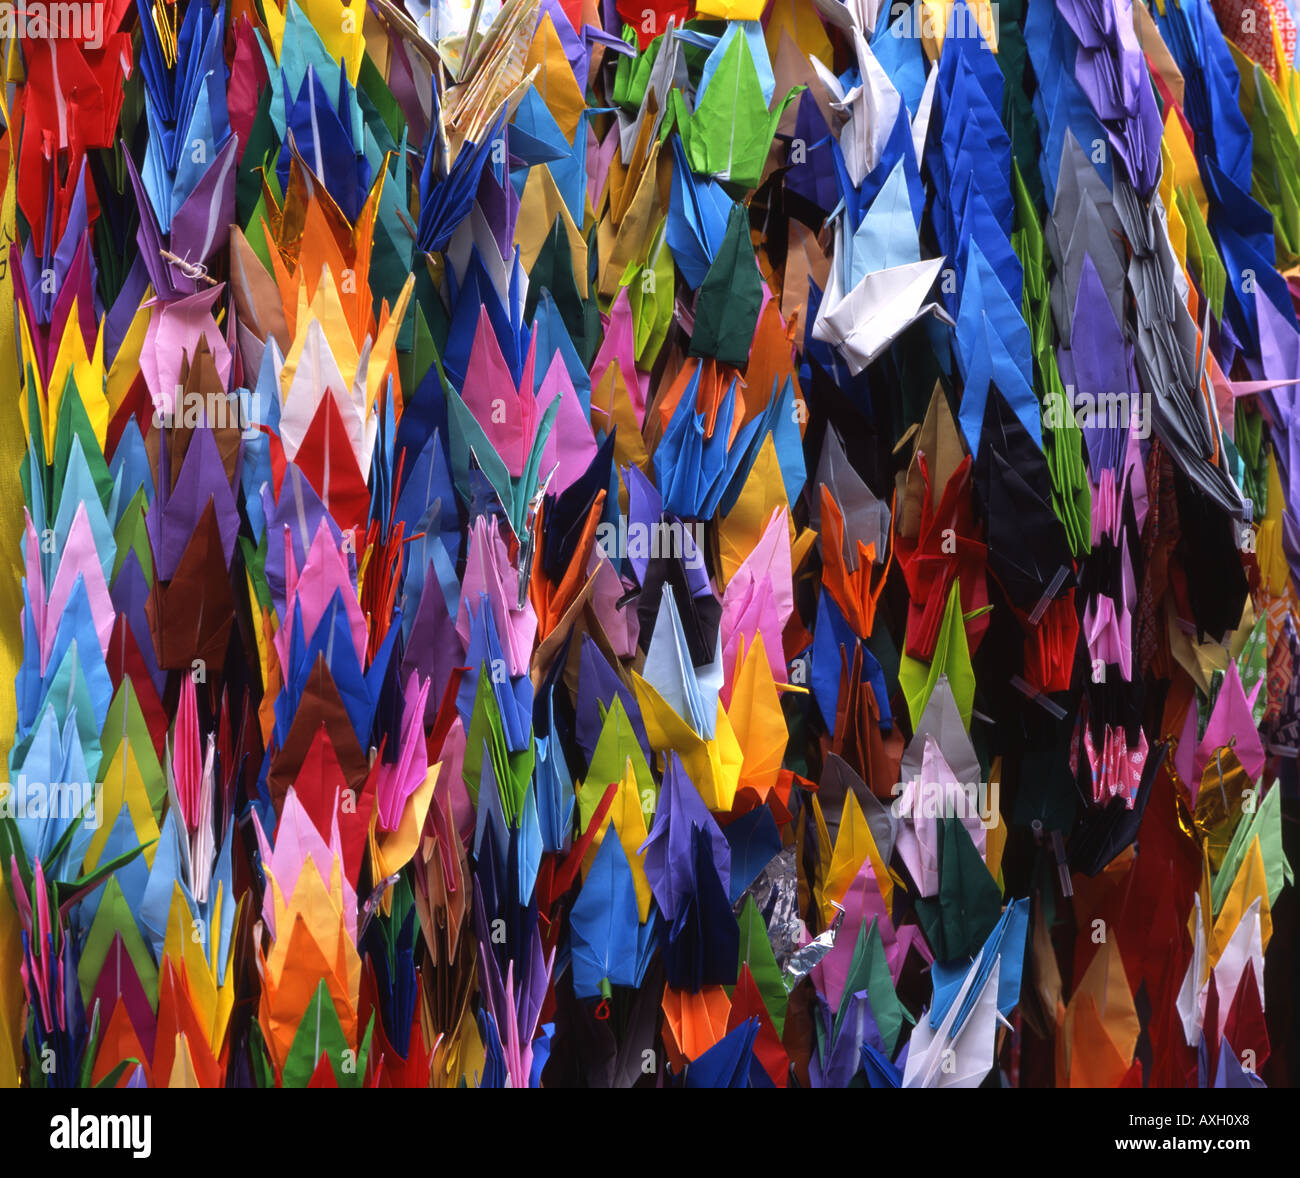 Senbazuru, a thousand paper origami cranes. Hanging at the Childrens's Peace Monument, Hiroshima, Japan. Stock Photo